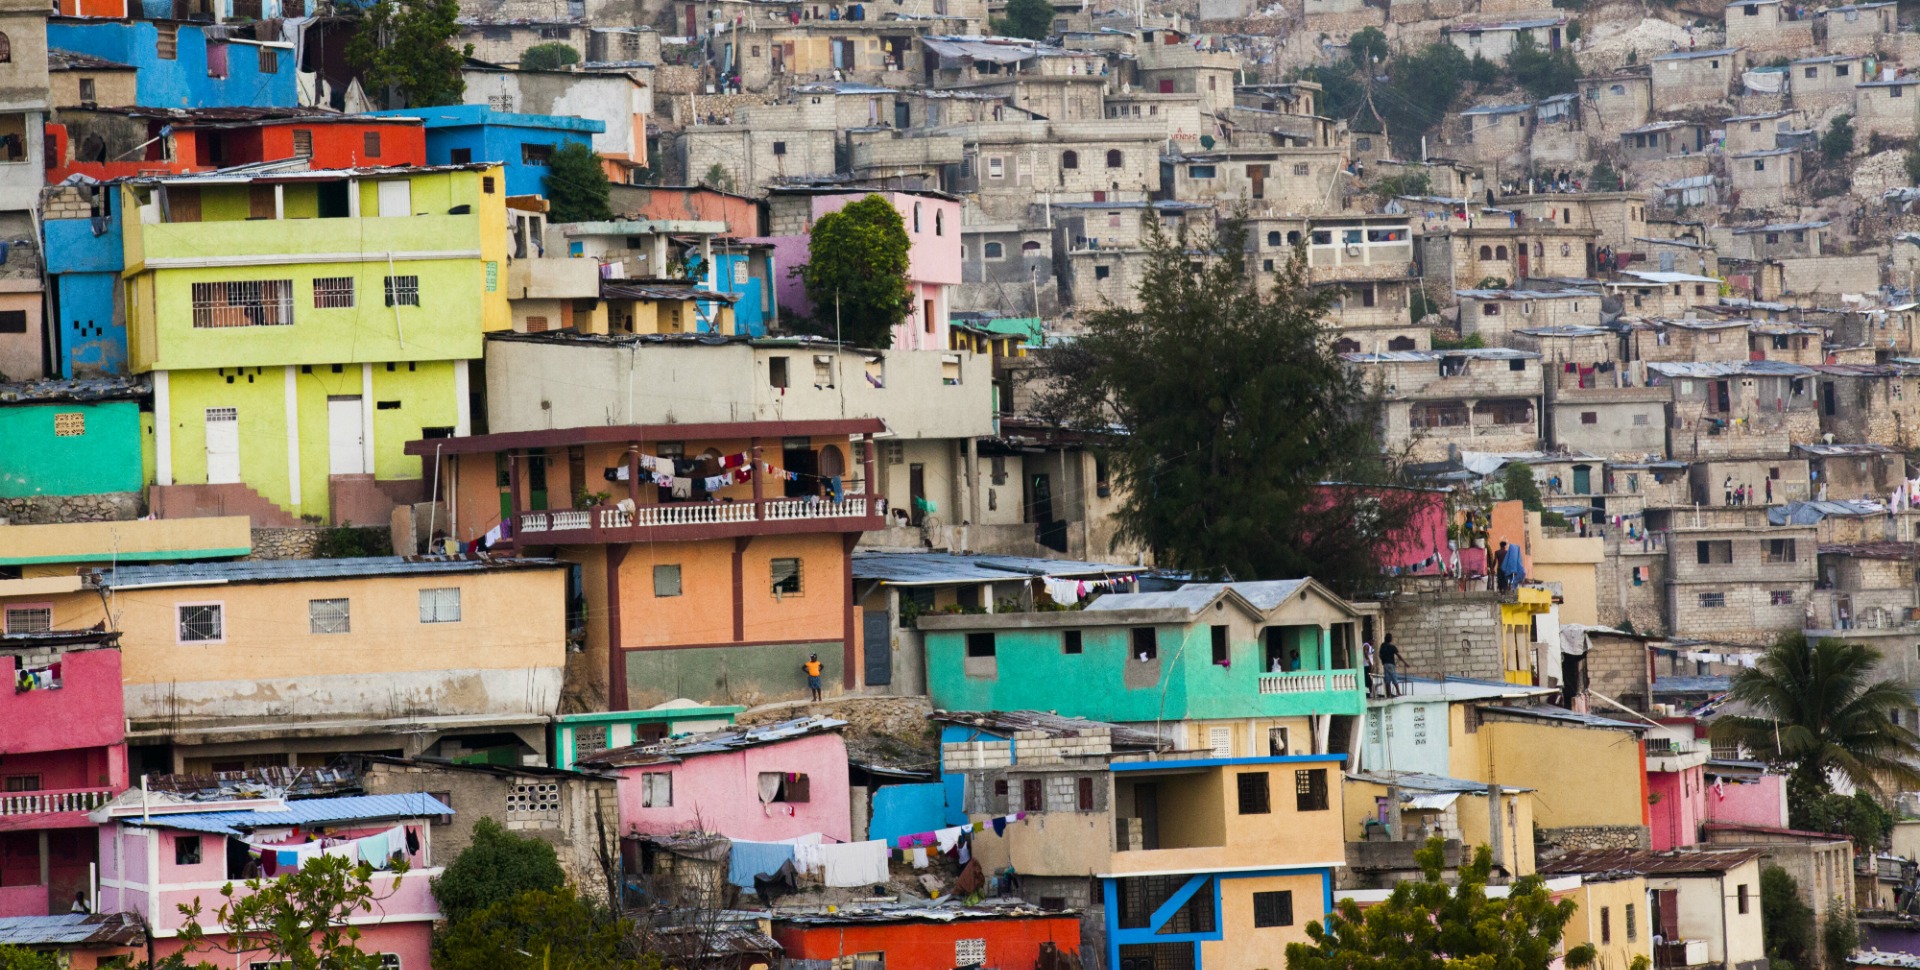 Many colourful houses in Haiti